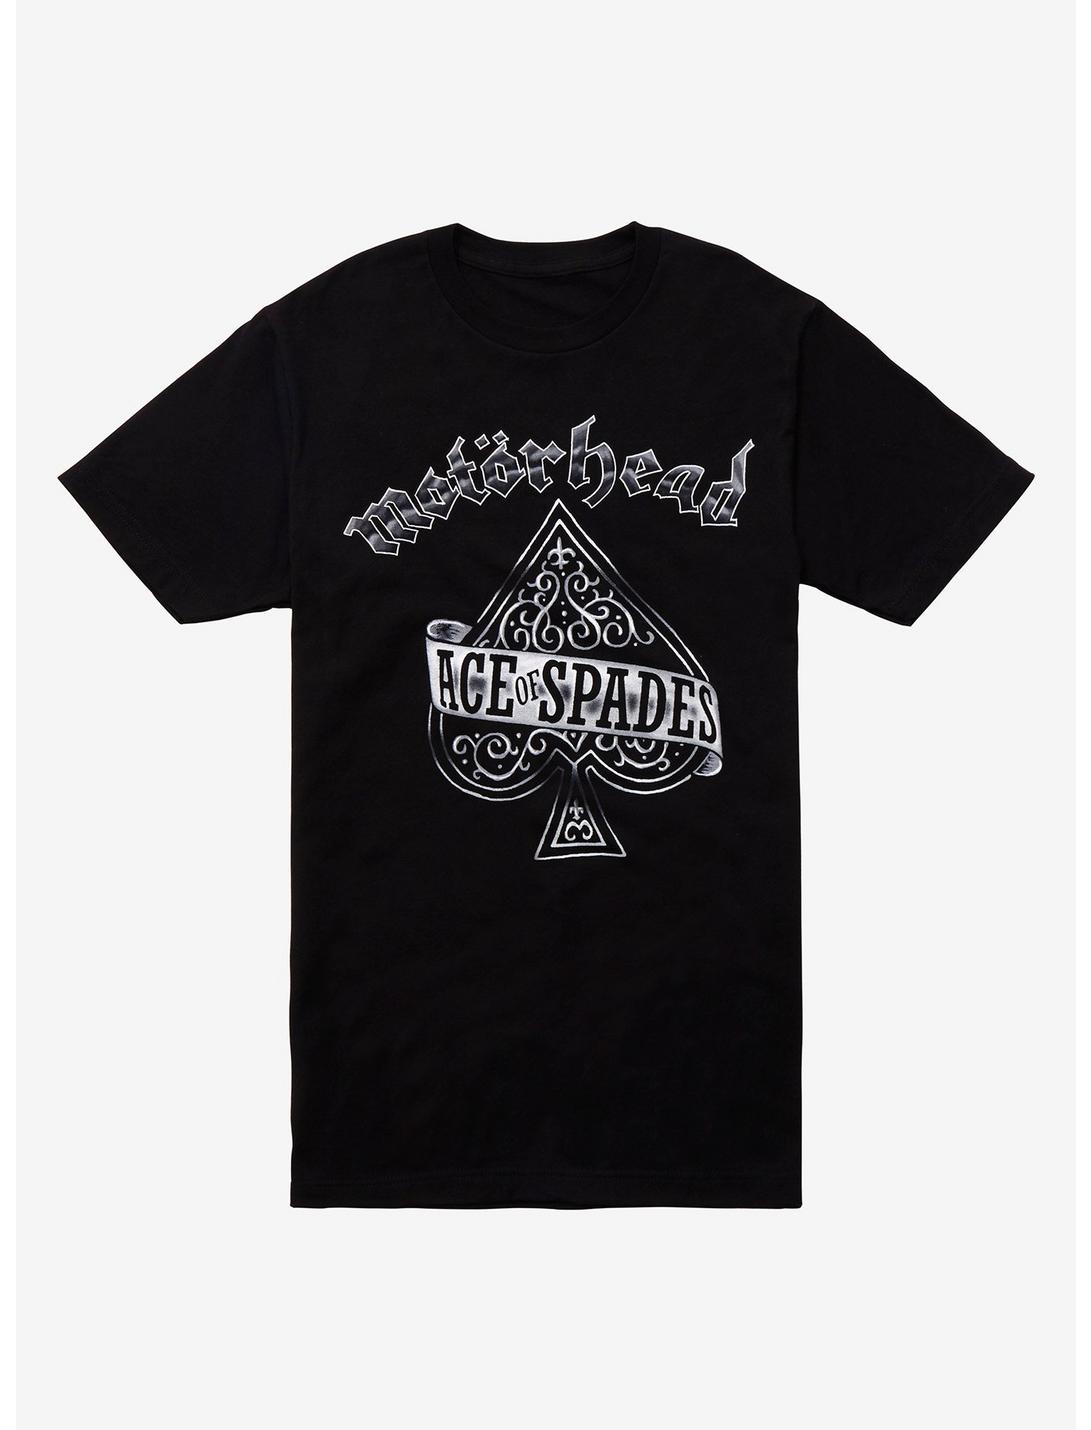 Motorhead Ace Up Your Sleeve 1980 Tour T-Shirt, BLACK, hi-res